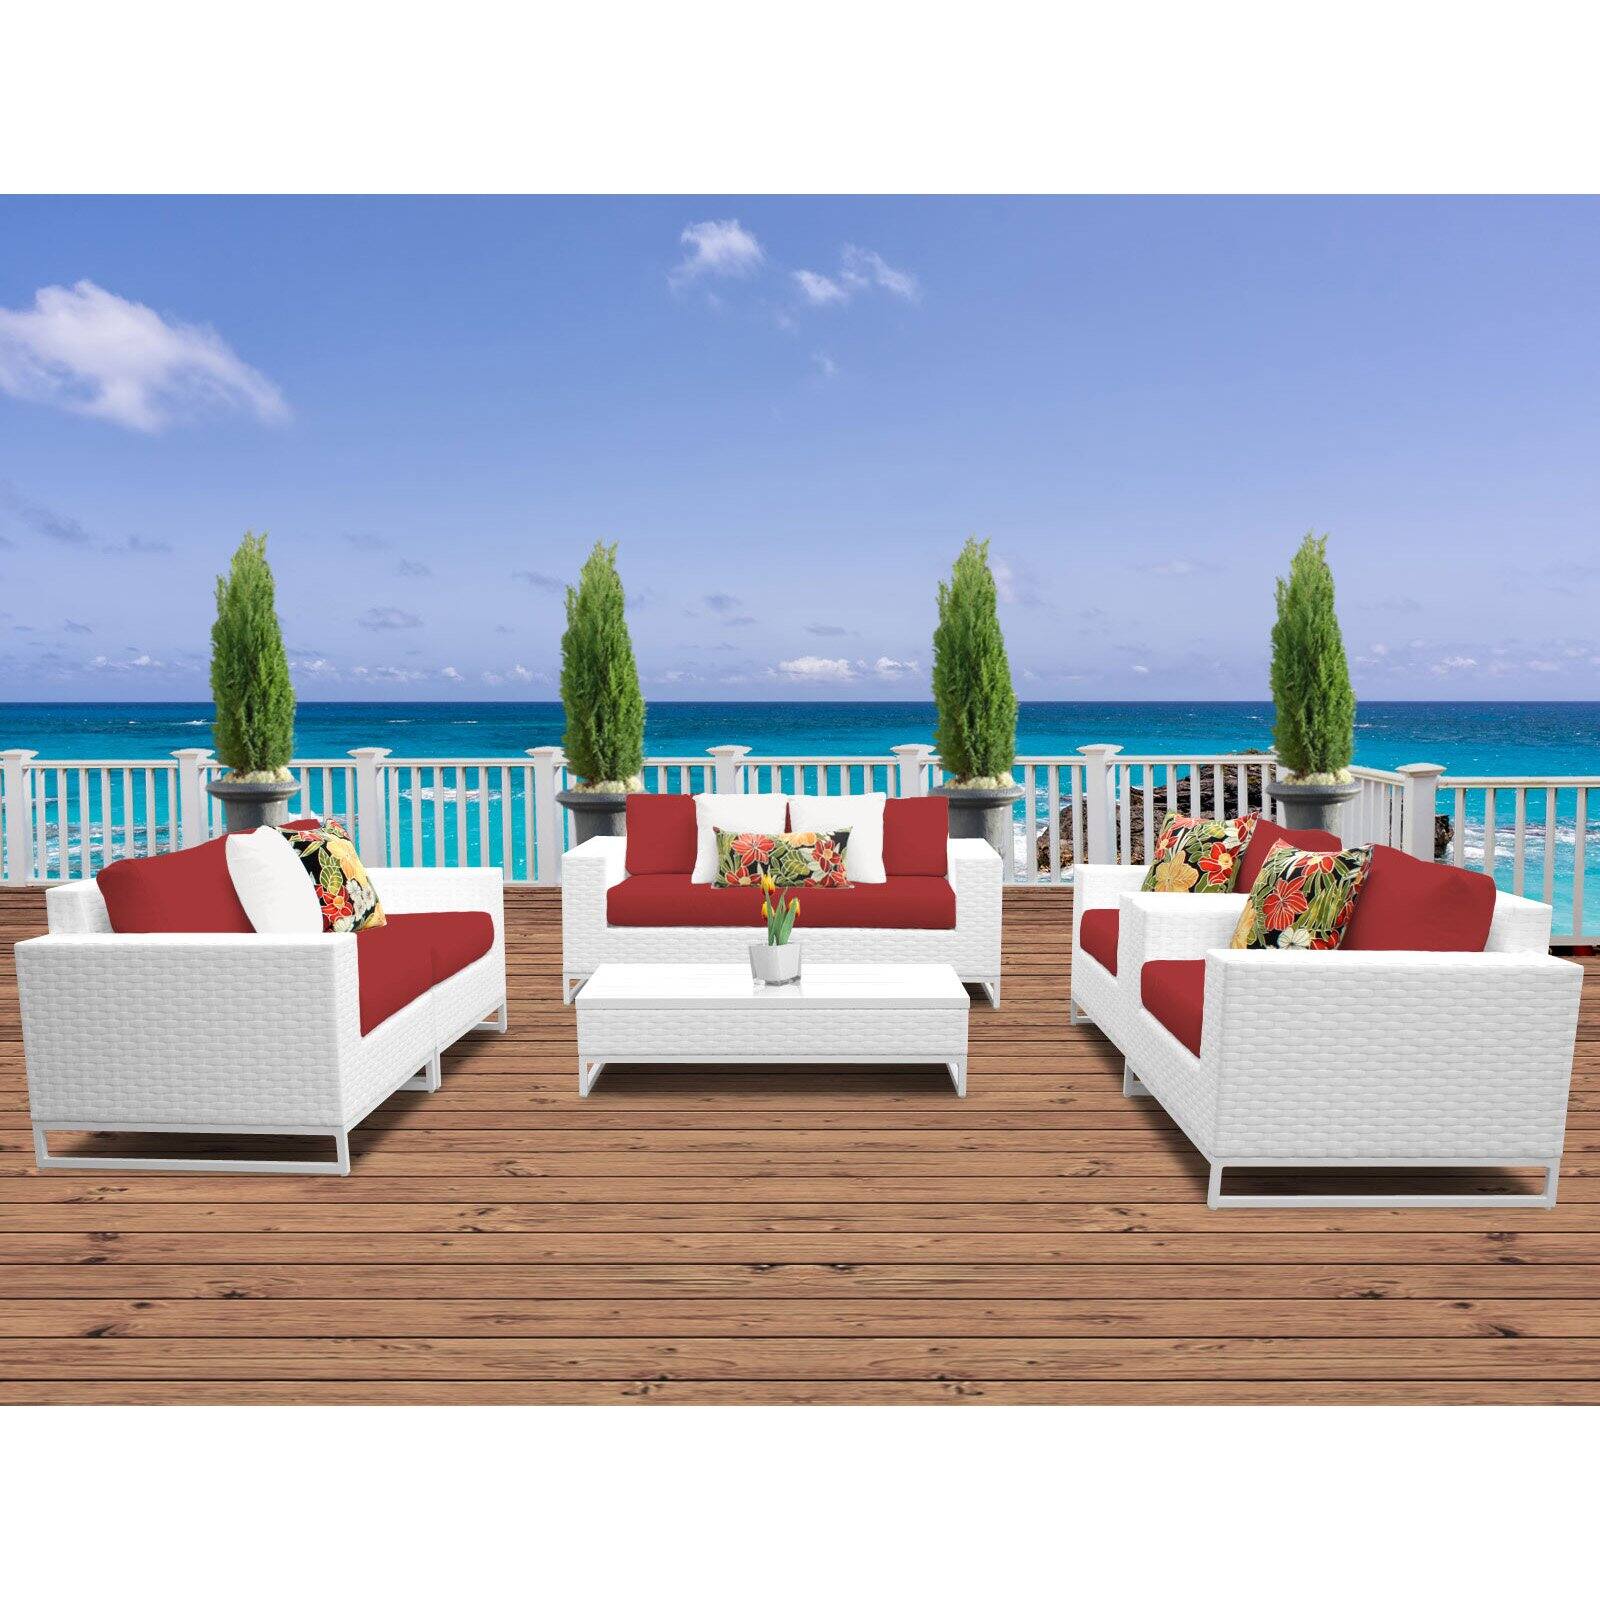 TK Classics Miami 7 Piece Outdoor Wicker Patio Furniture Set 07c - image 1 of 3